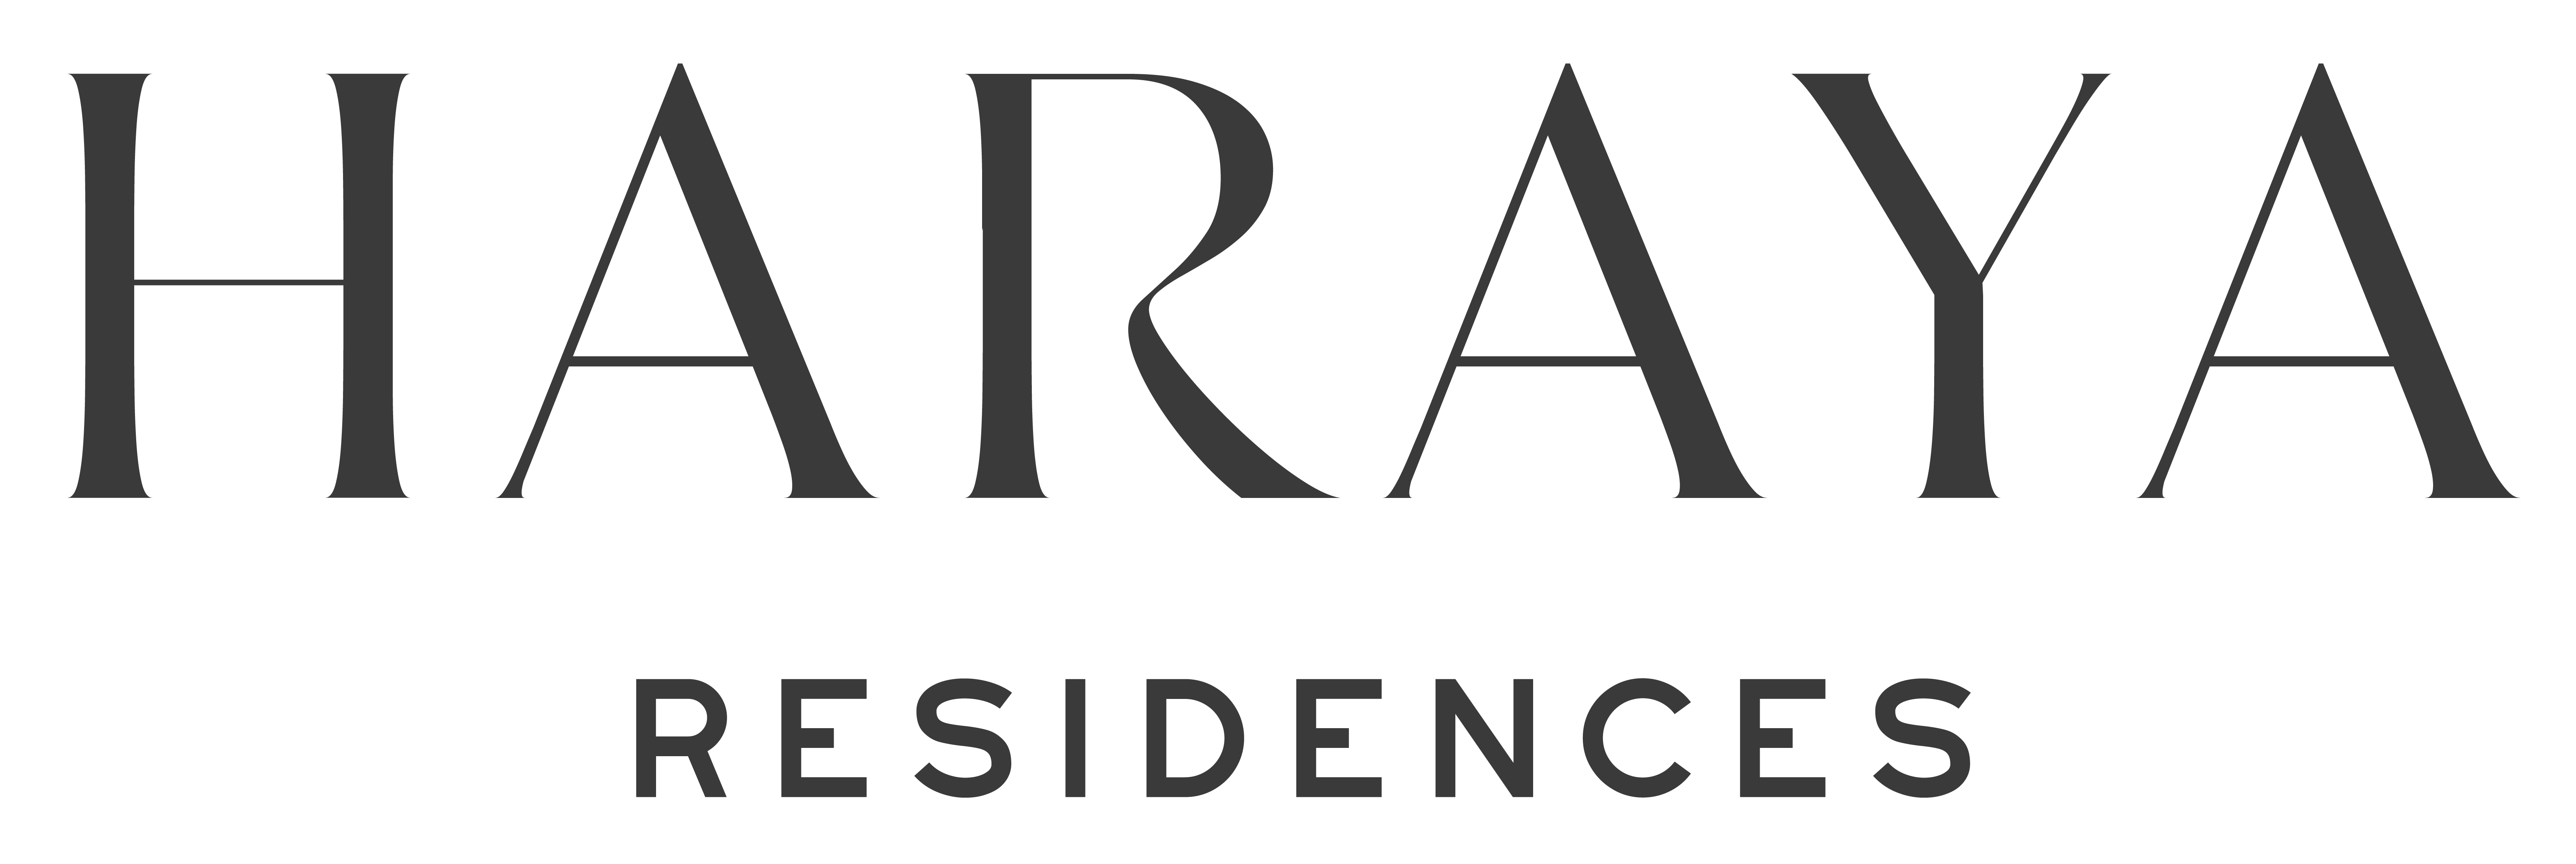 Haraya Residences